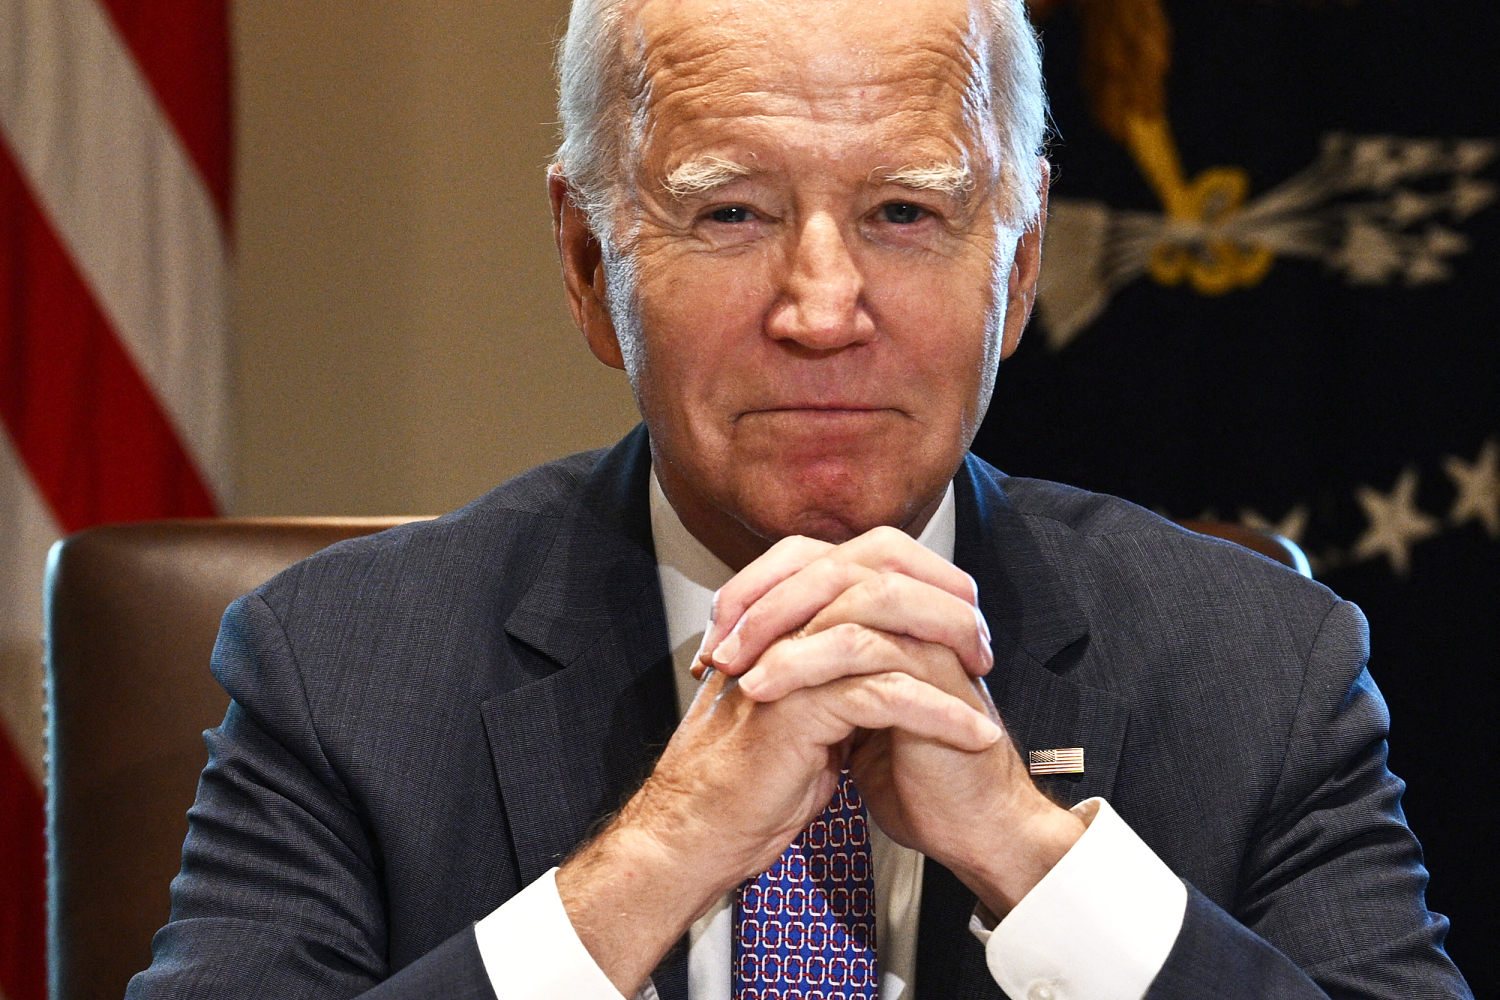 Biden says he had a 'bad episode' in first post-debate TV interview